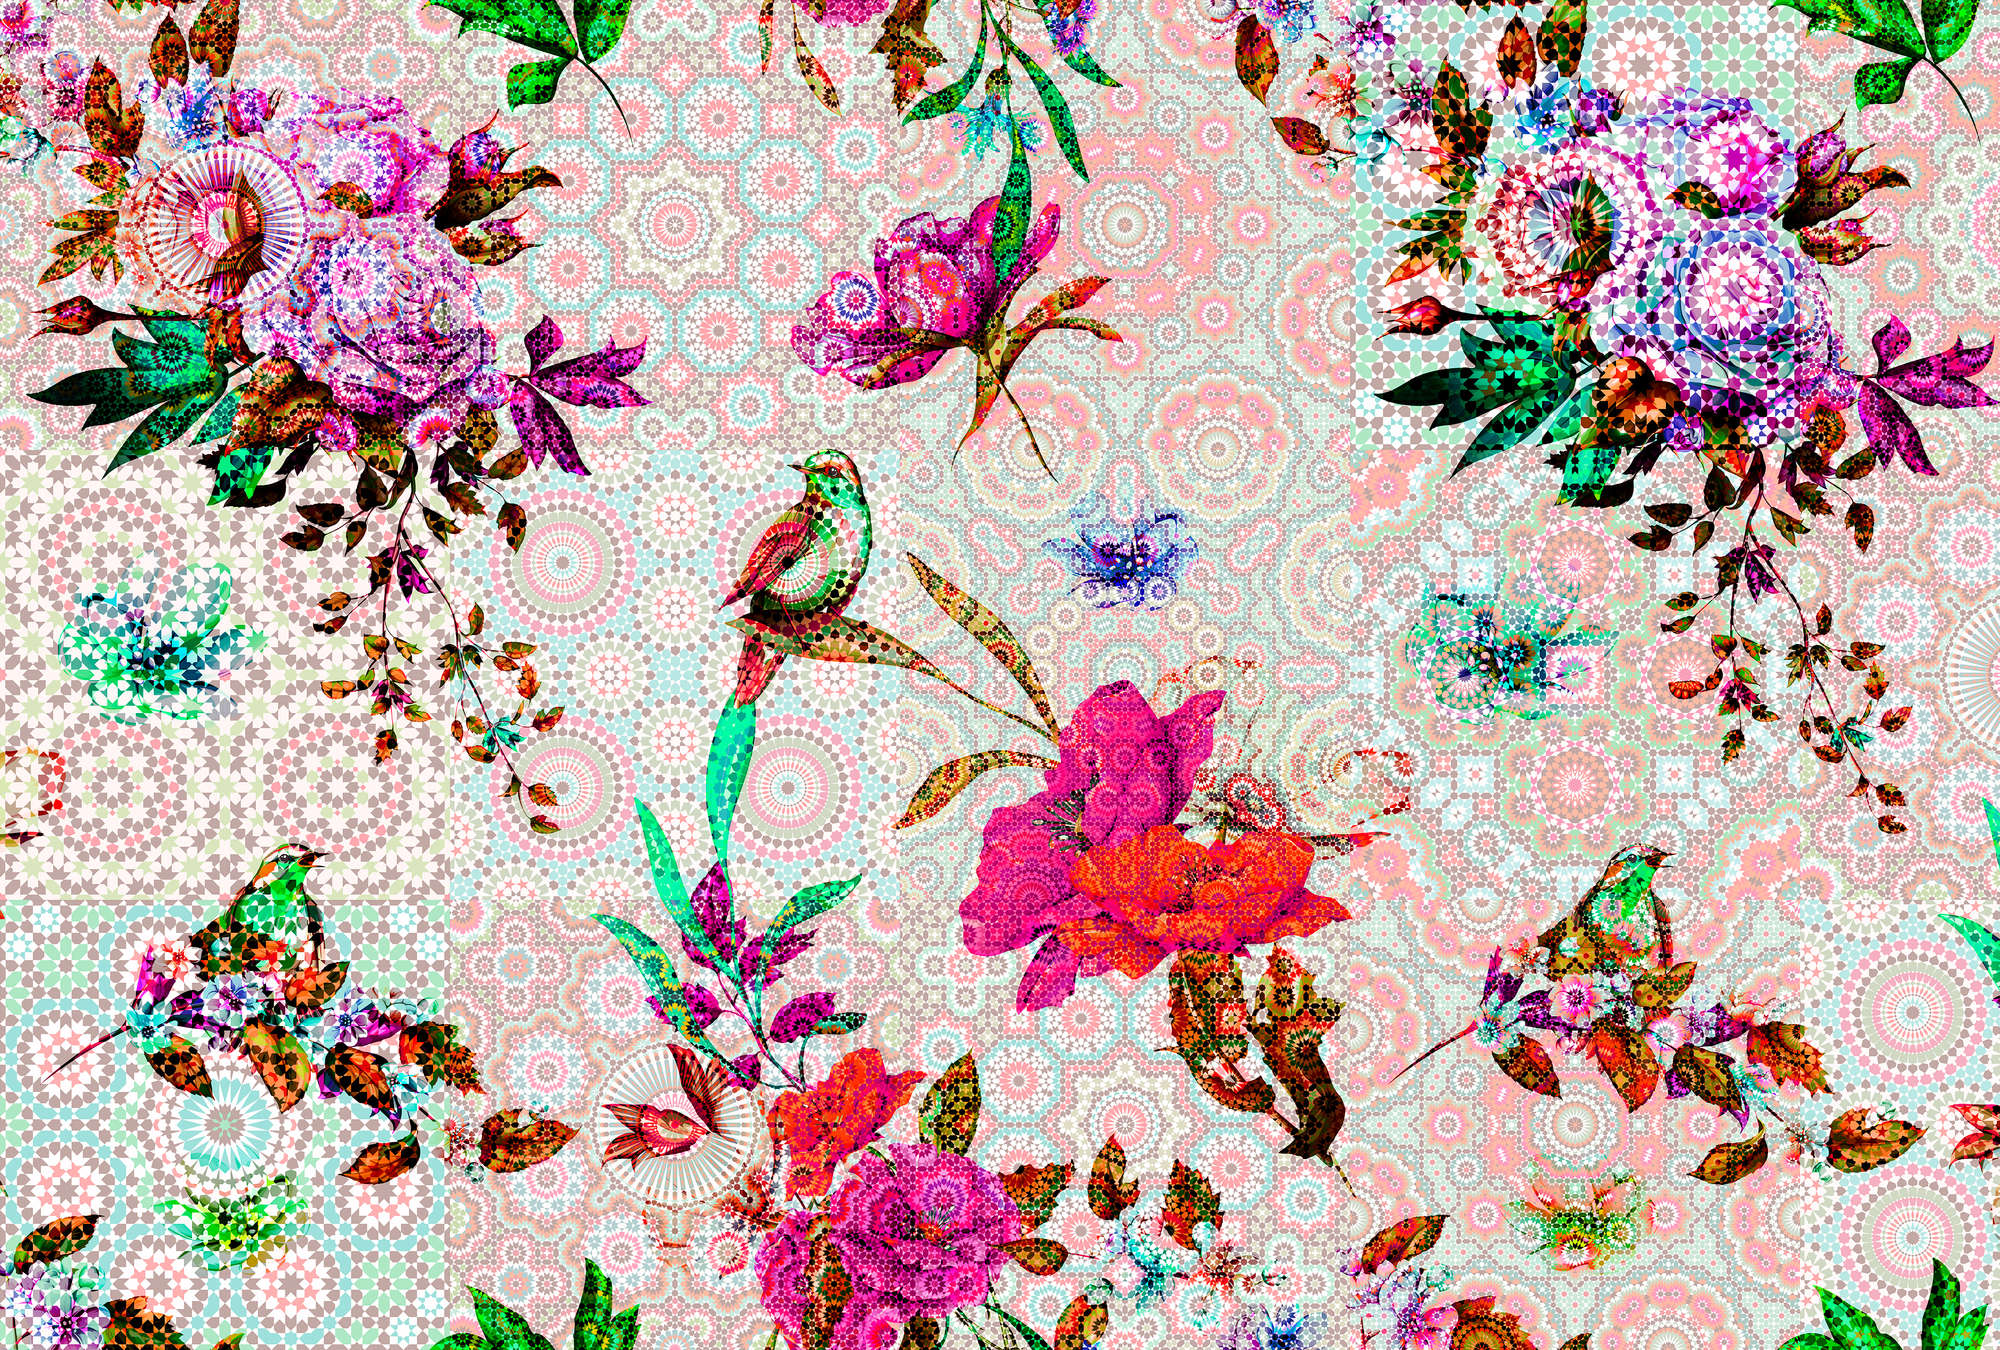             Design behang bloemenmozaïek - Walls by Patel
        